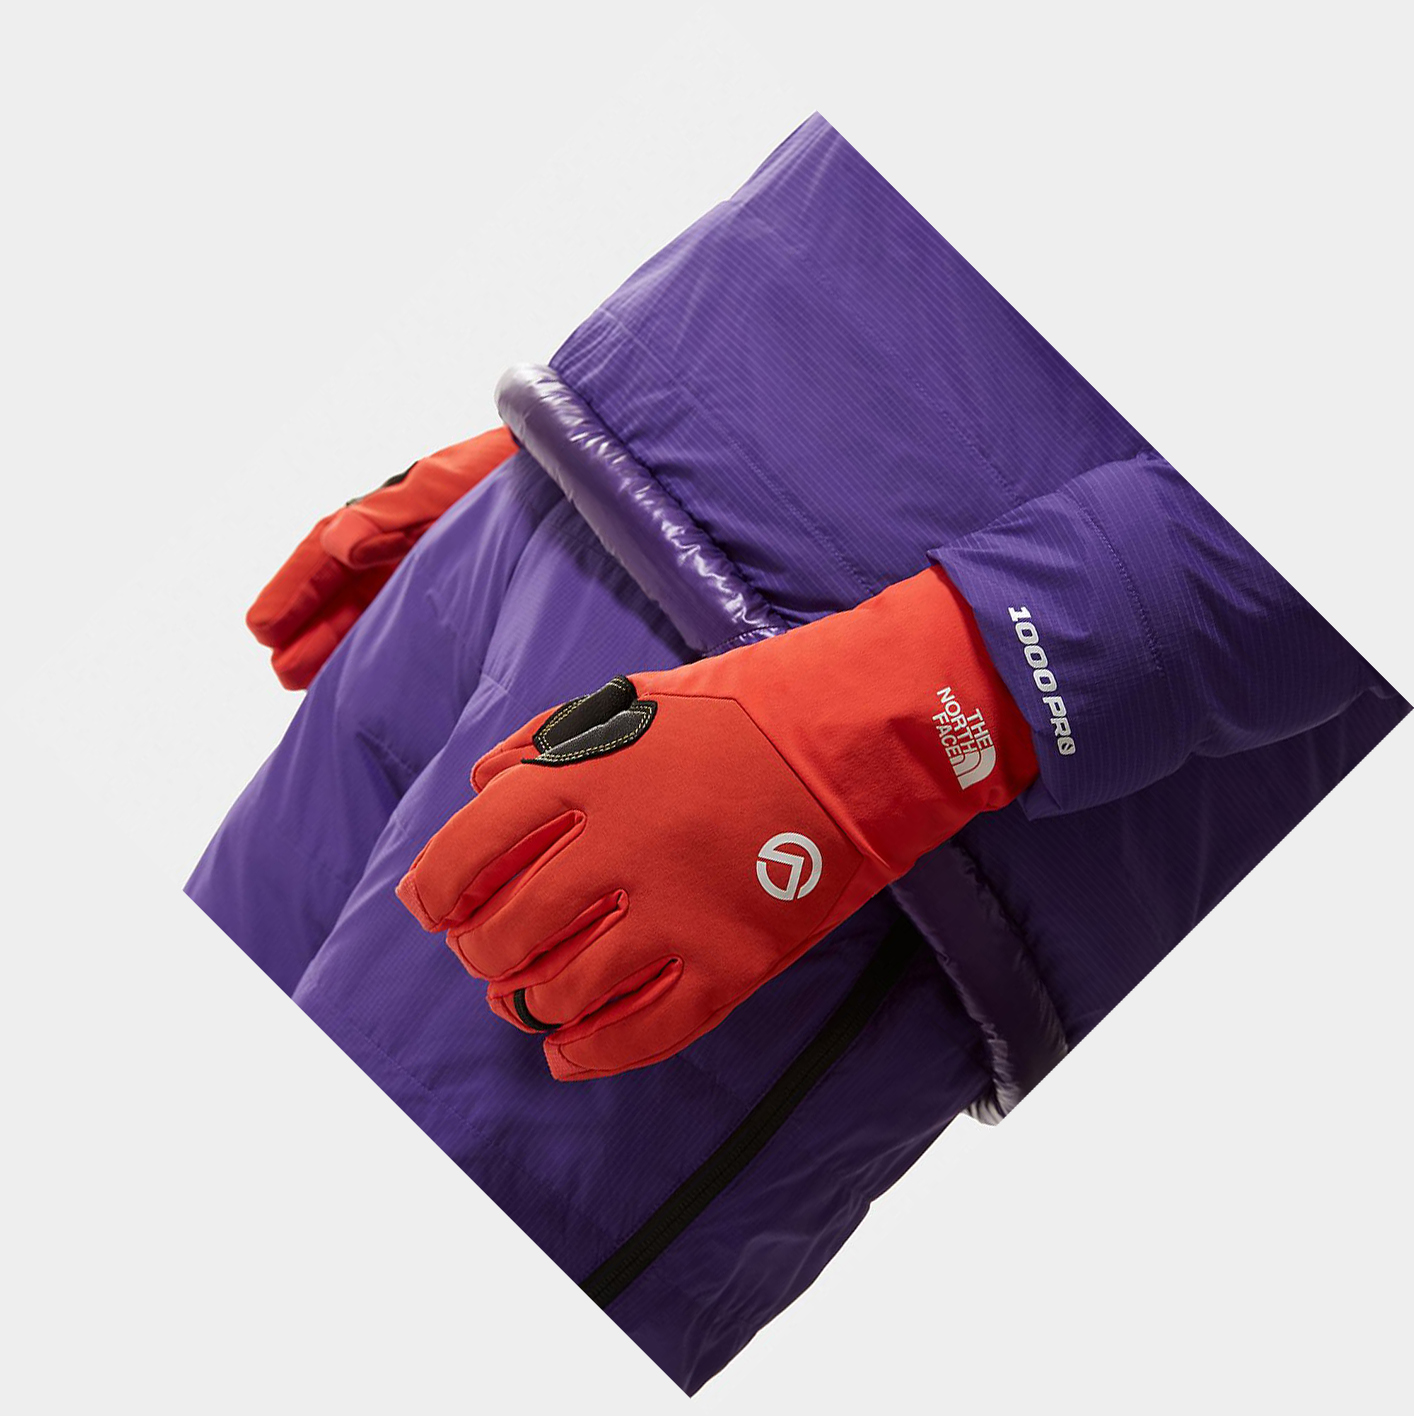 Men's The North Face AMK L1 SOFTSHELL Gloves Orange | US416LAMX